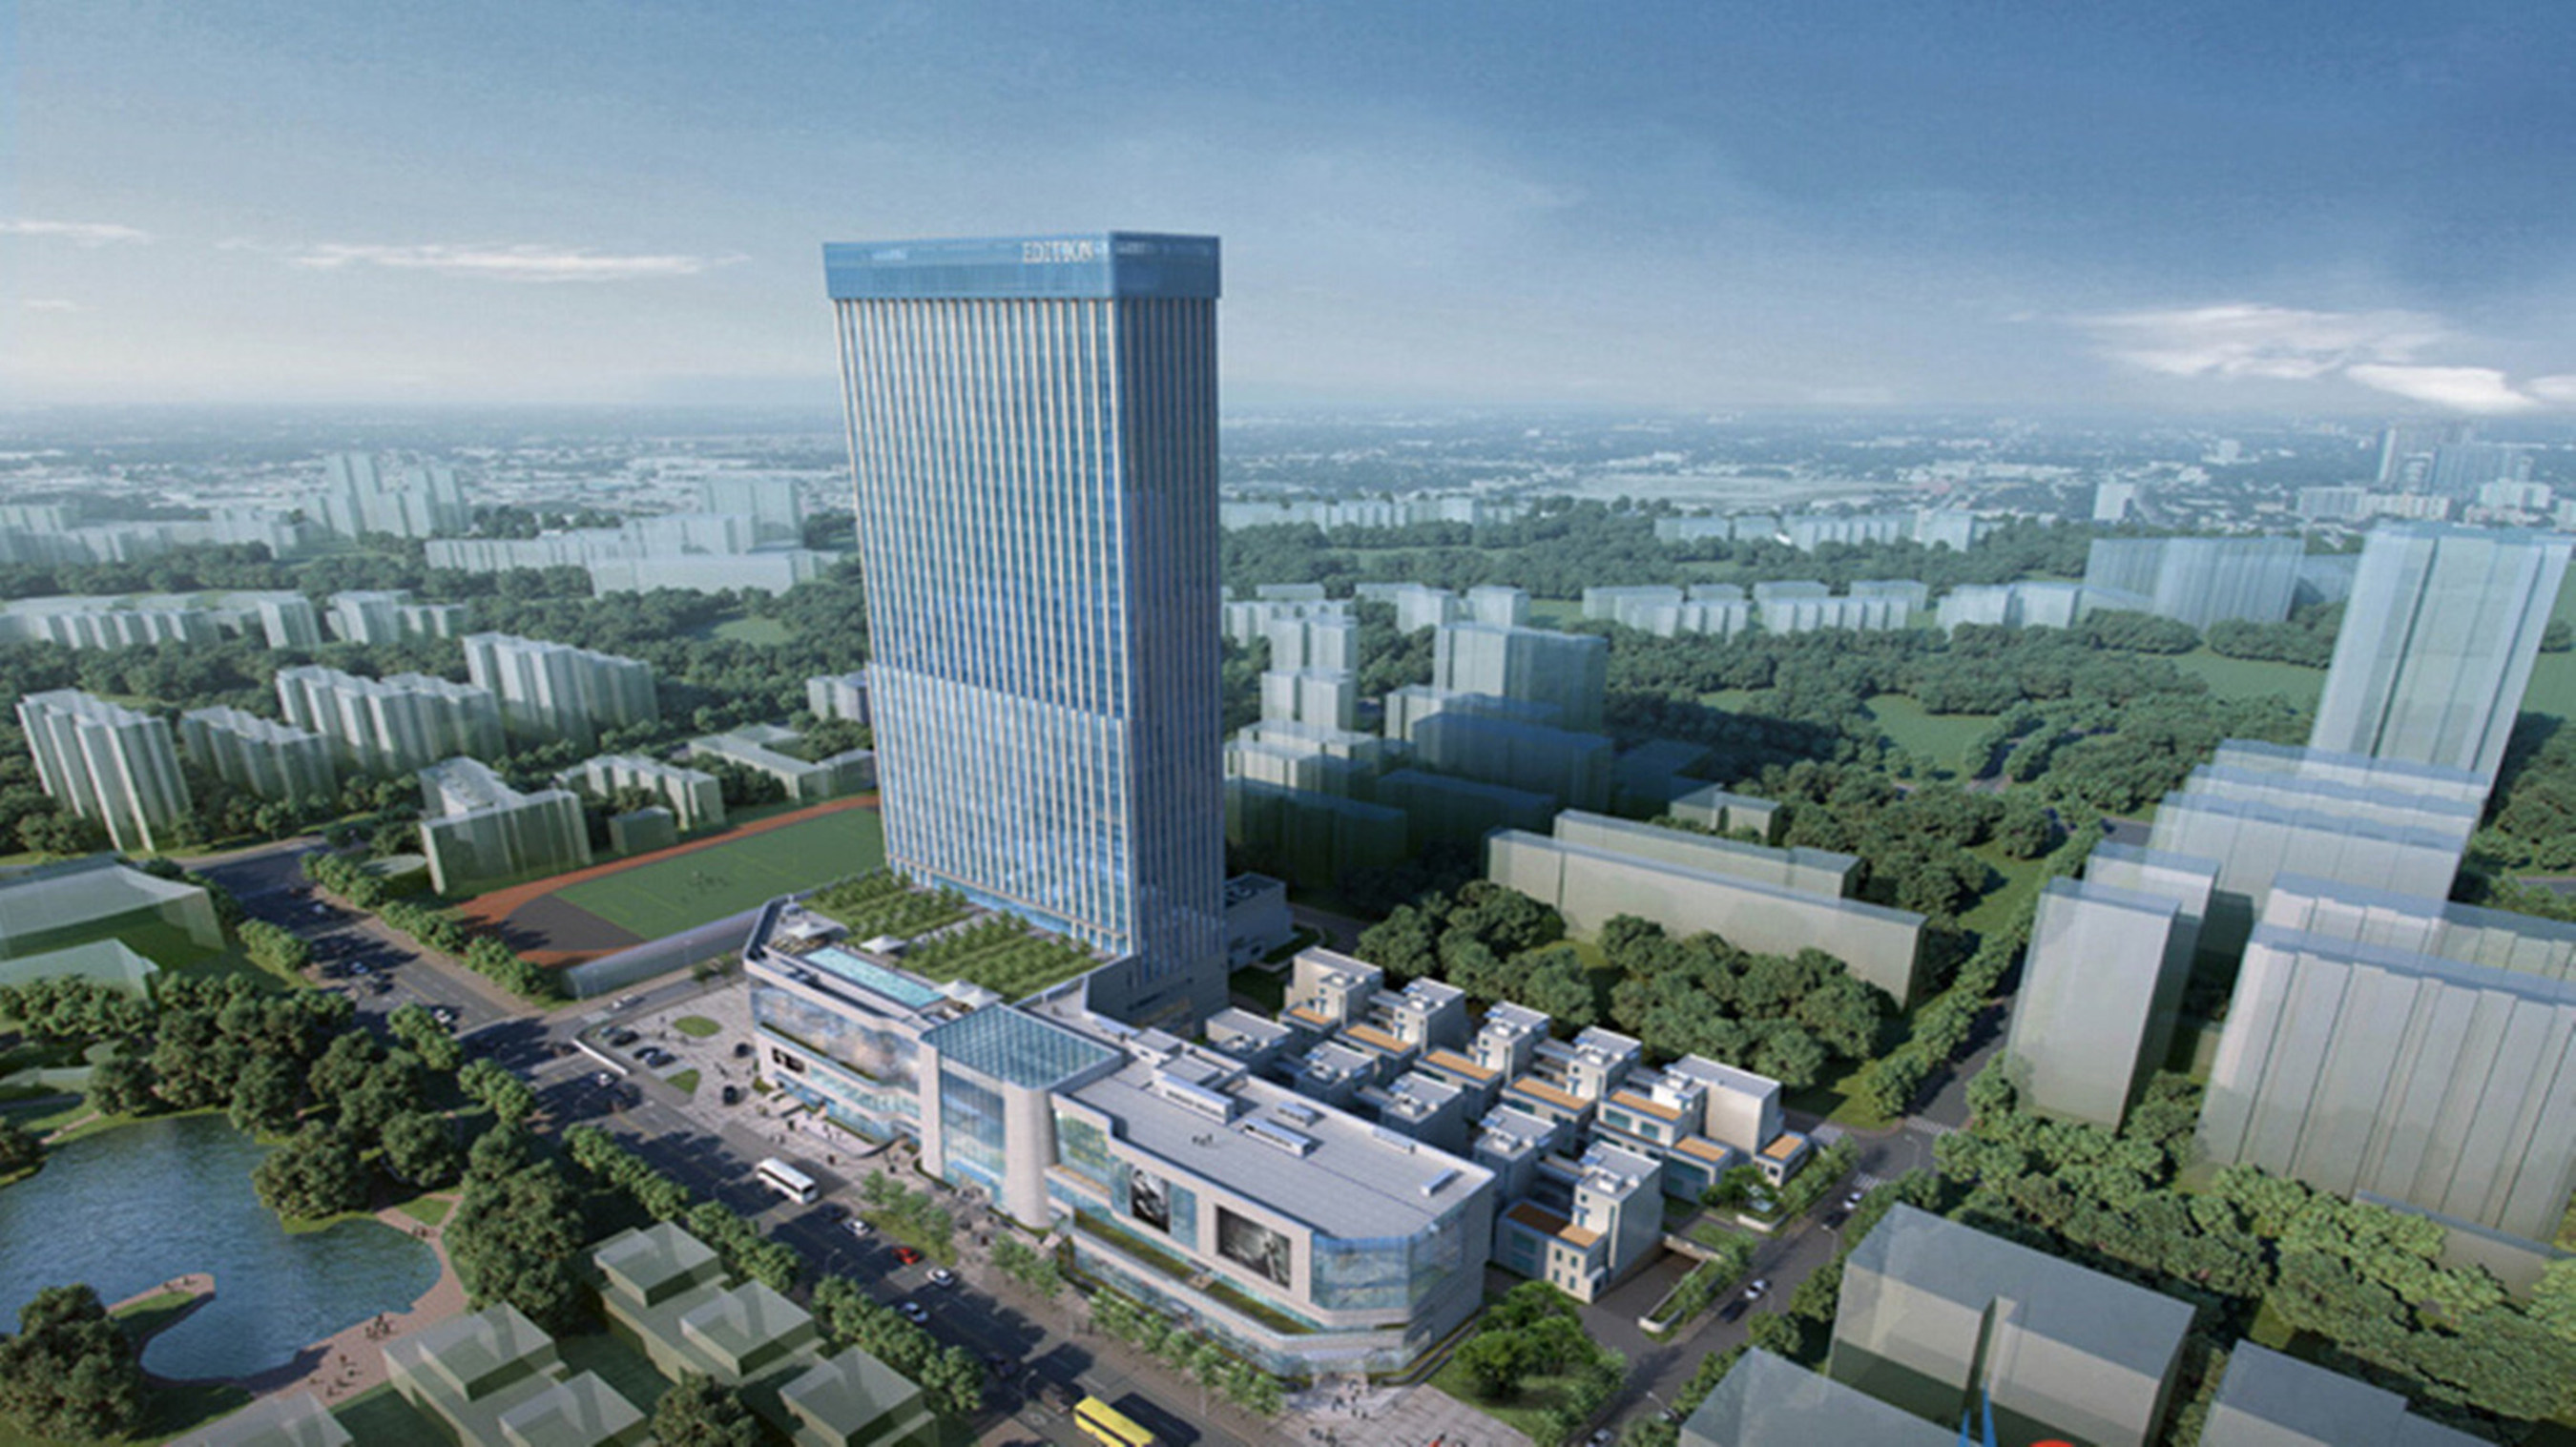 Otis China will supply 30 elevators and escalators for the Xiamen Marriott EDITION hotel.